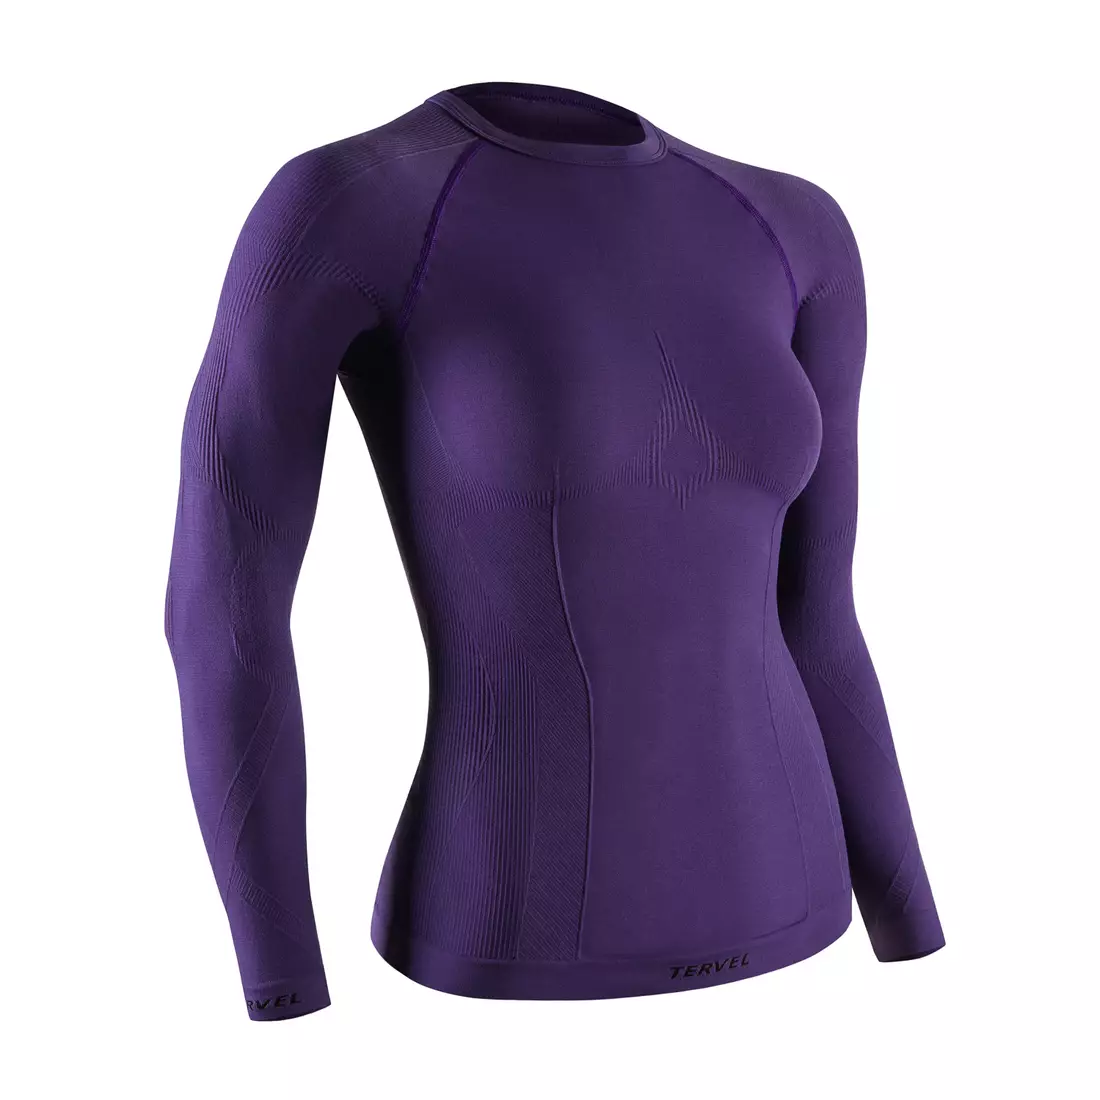 TERVEL COMFORTLINE 2002 - women's thermal T-shirt, long sleeve, color: Purple (lilac)